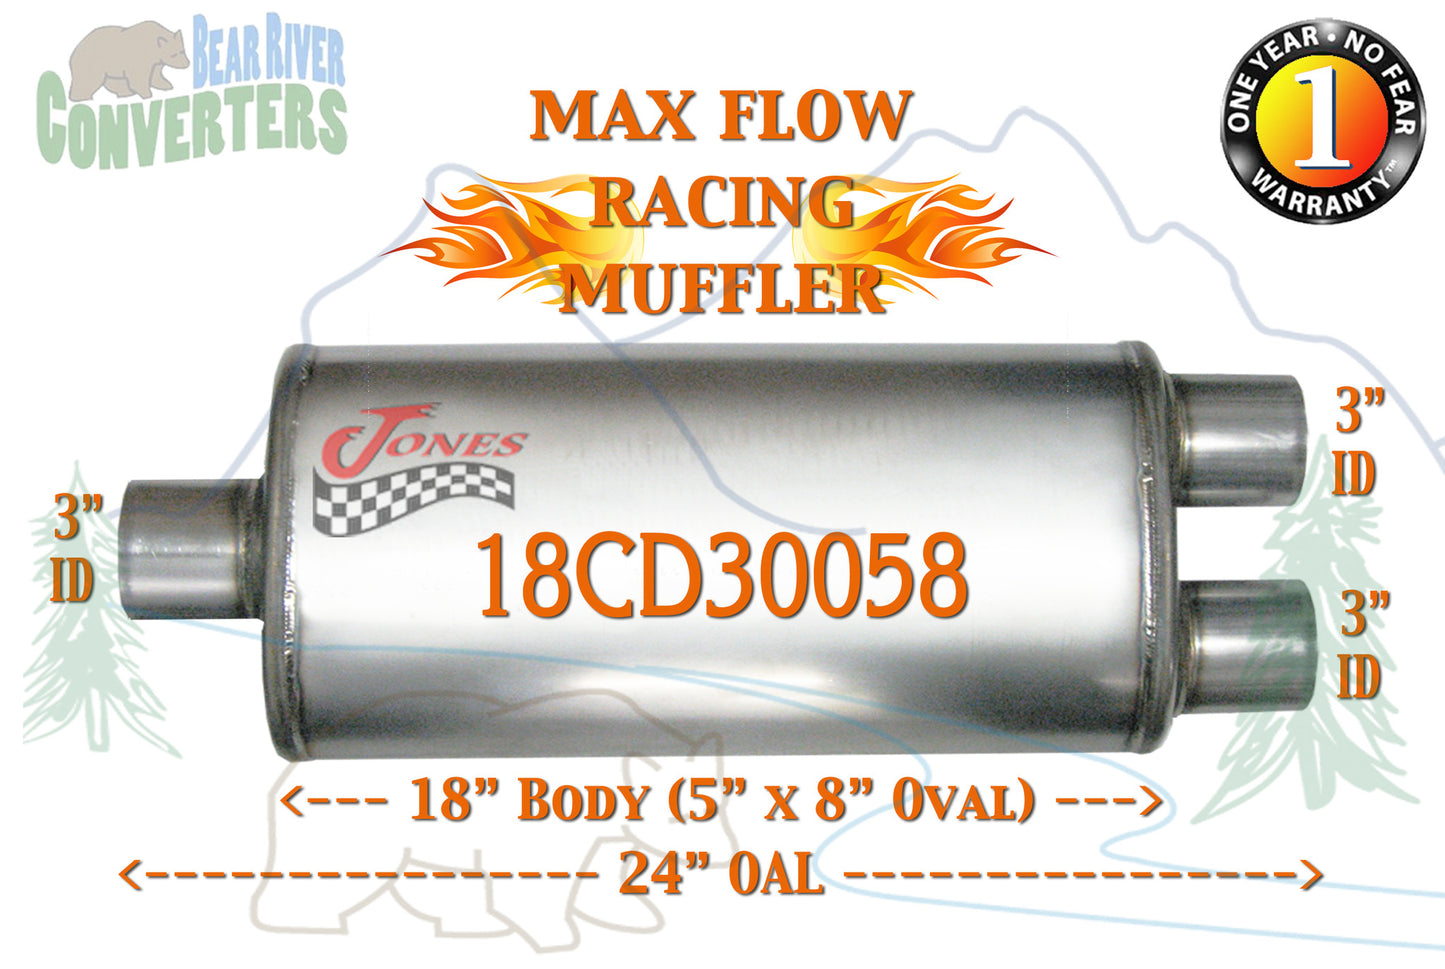 18CD30058 Jones MF2298 Max Flow Racing Muffler 18” Oval Body 3” Pipe Center/Dual 24” OAL - Bear River Converters